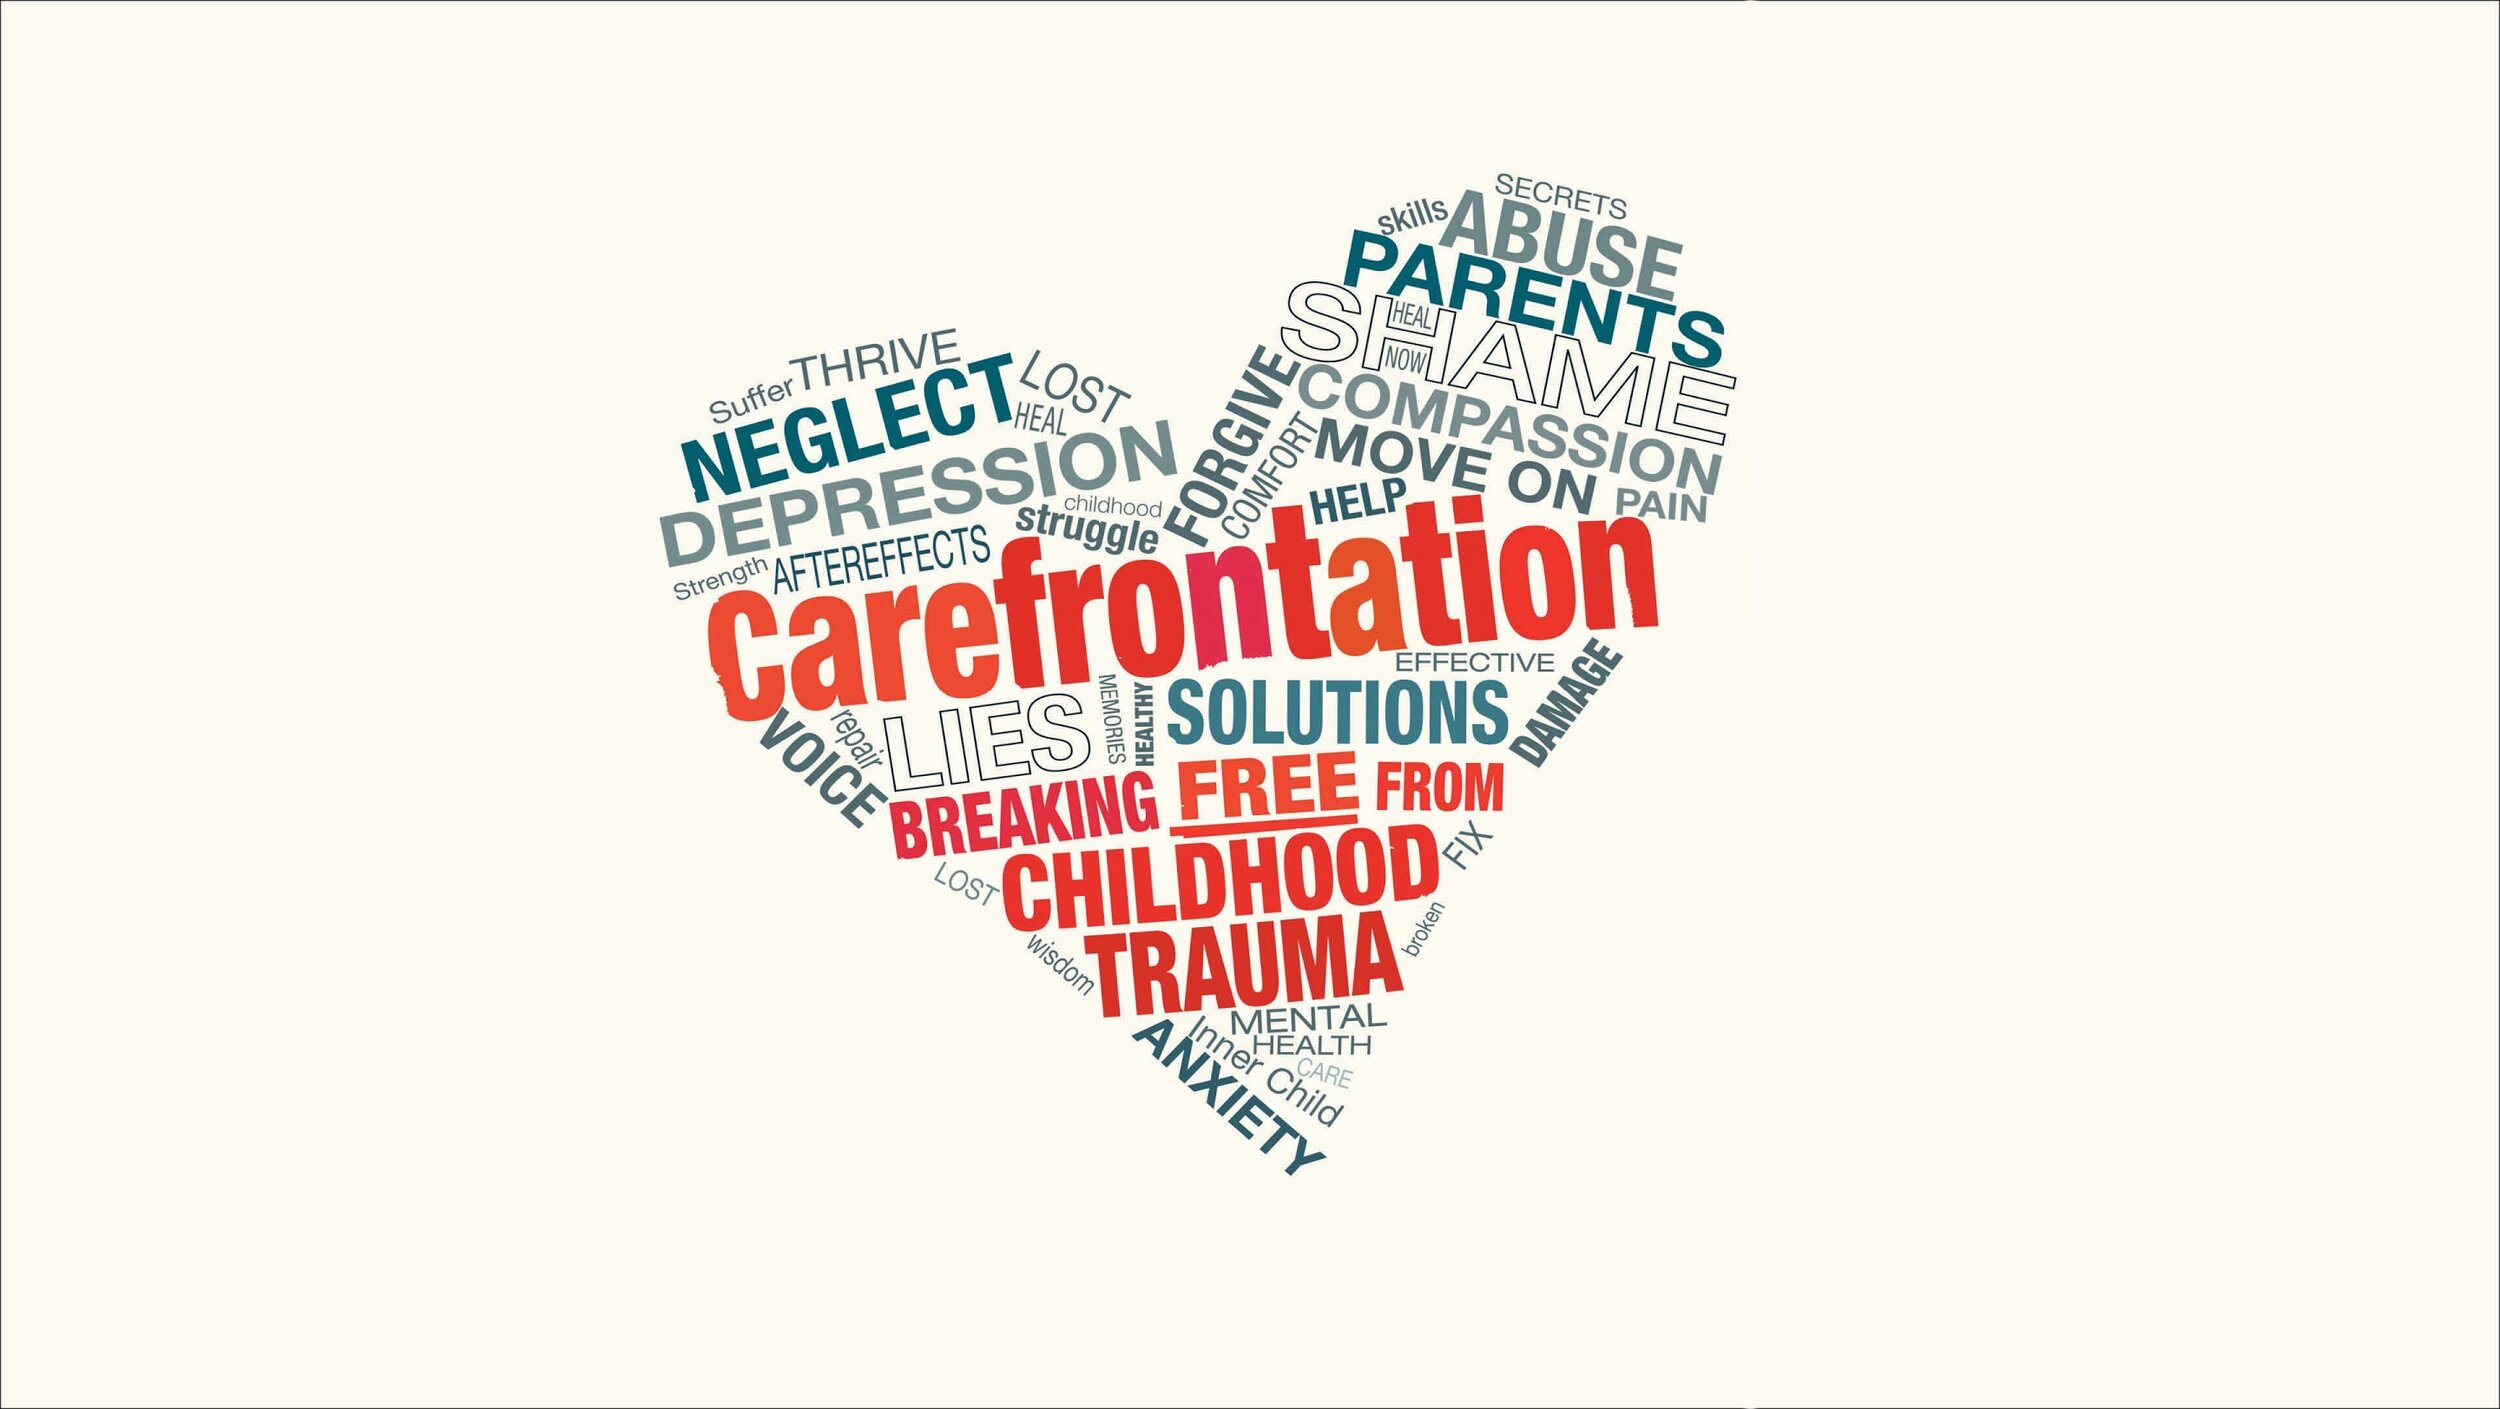 Carefrontation: Breaking Free From Childhood Trauma: Drake PhD, Arlene:  9781942872818: : Books